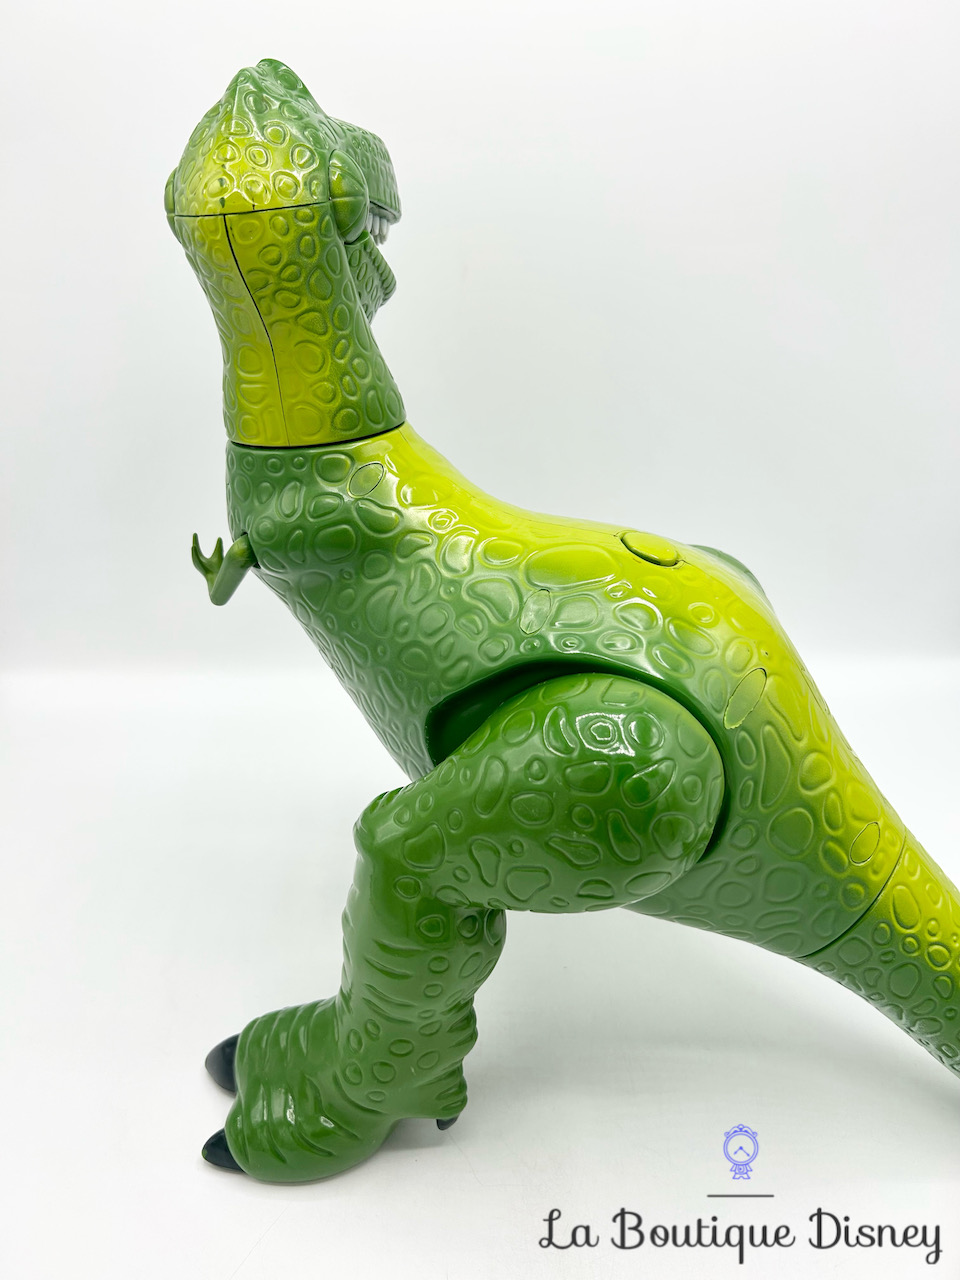 jouet-figurine-rex-parlant-sonore-disney-store-toy-story-dinosaure-vert-interactif-7